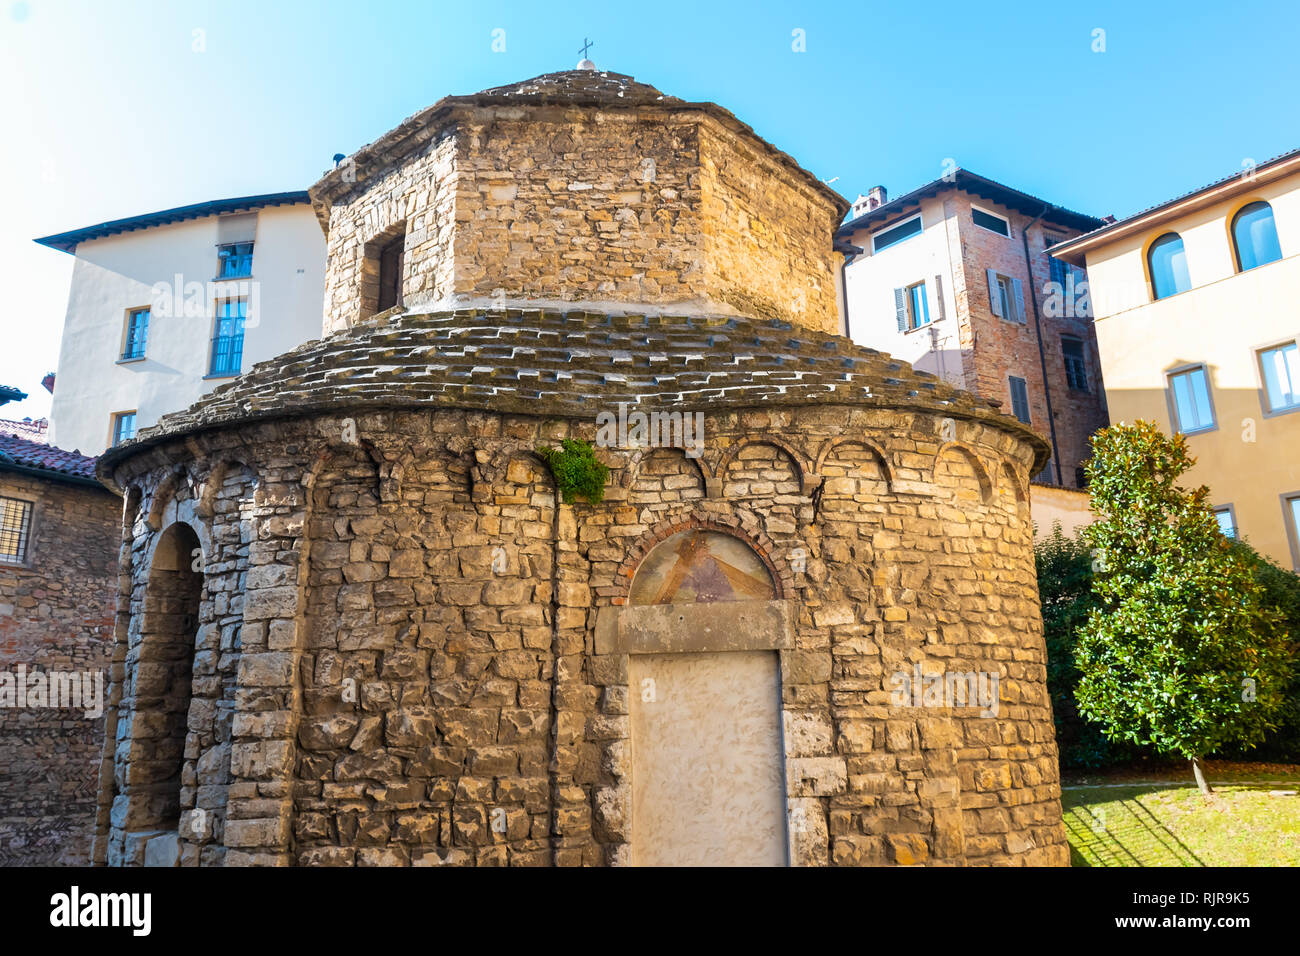 Very old Tempietto of Santa Croce hidden octagonal Romanesque chapel from 11st century in Citta Alta, Bergamo, Italy. Stock Photo